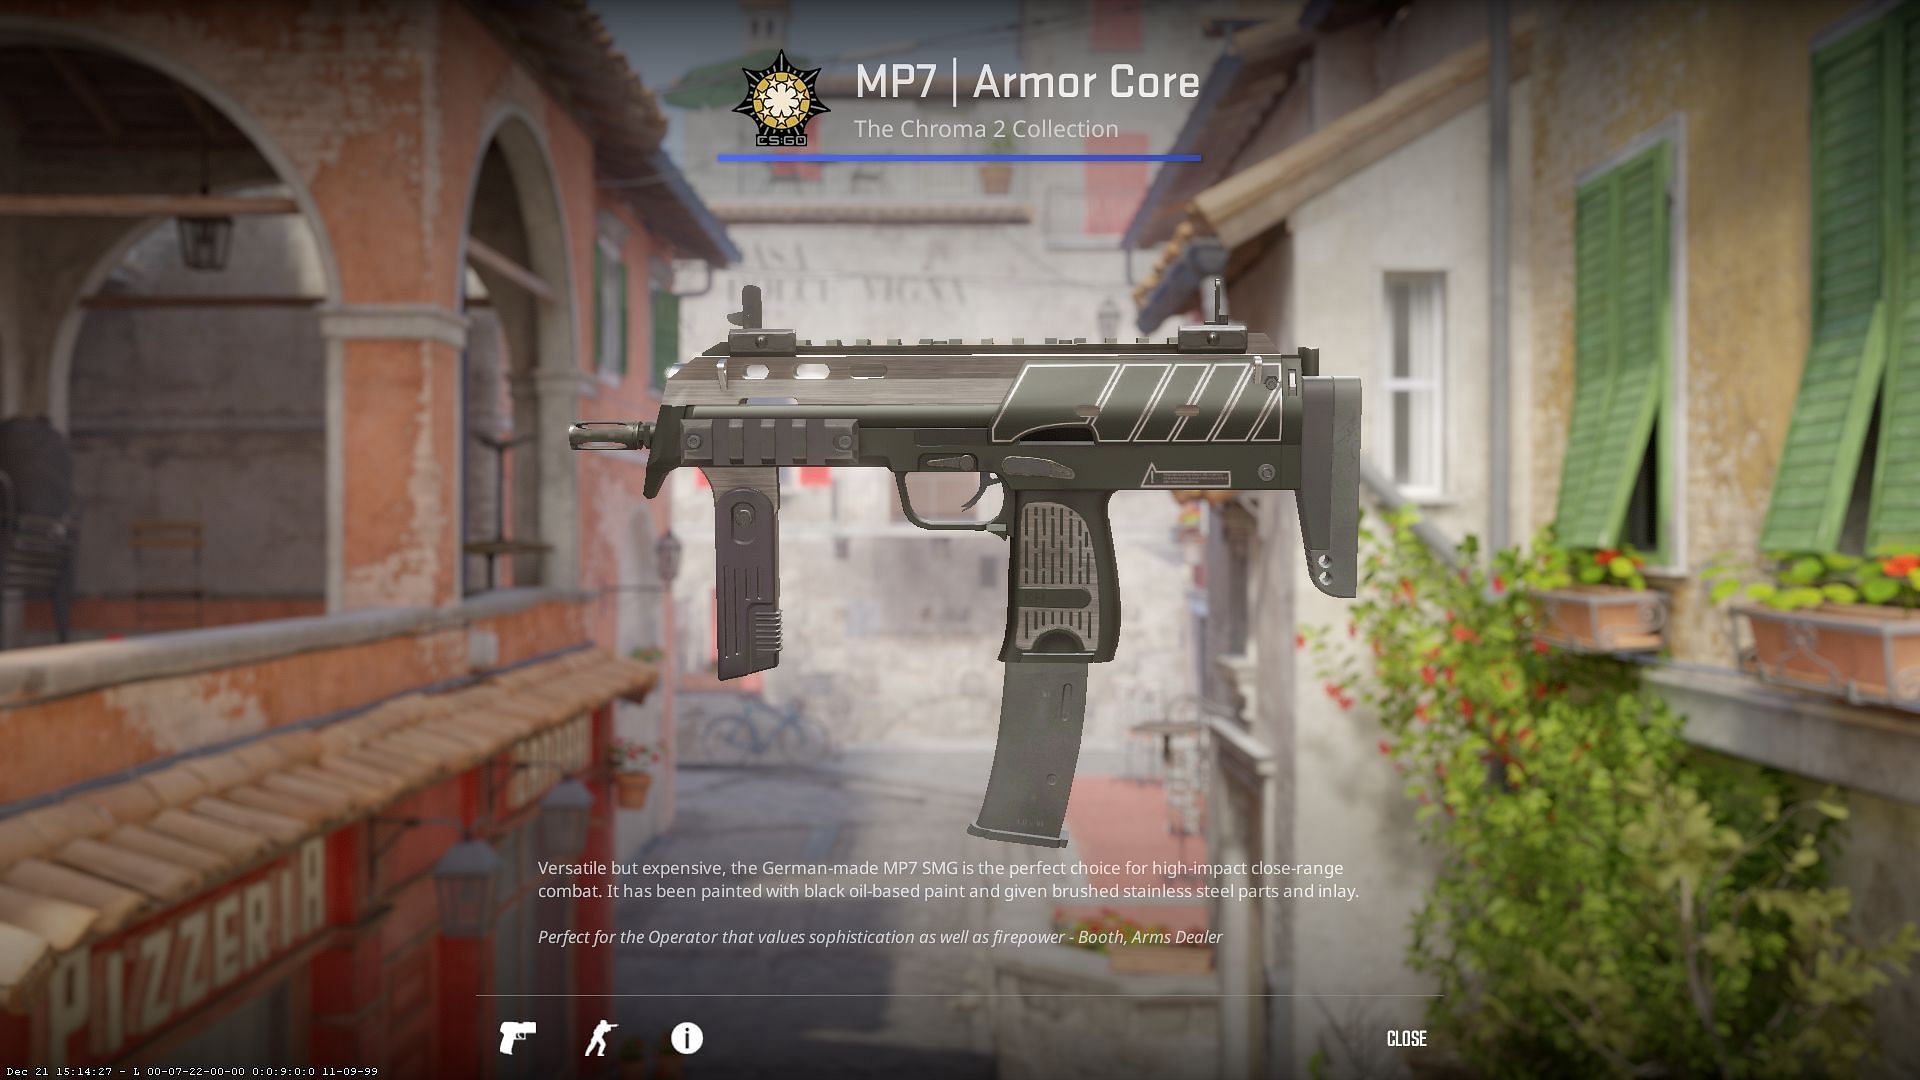 MP7 Armor Core (Image via Valve)